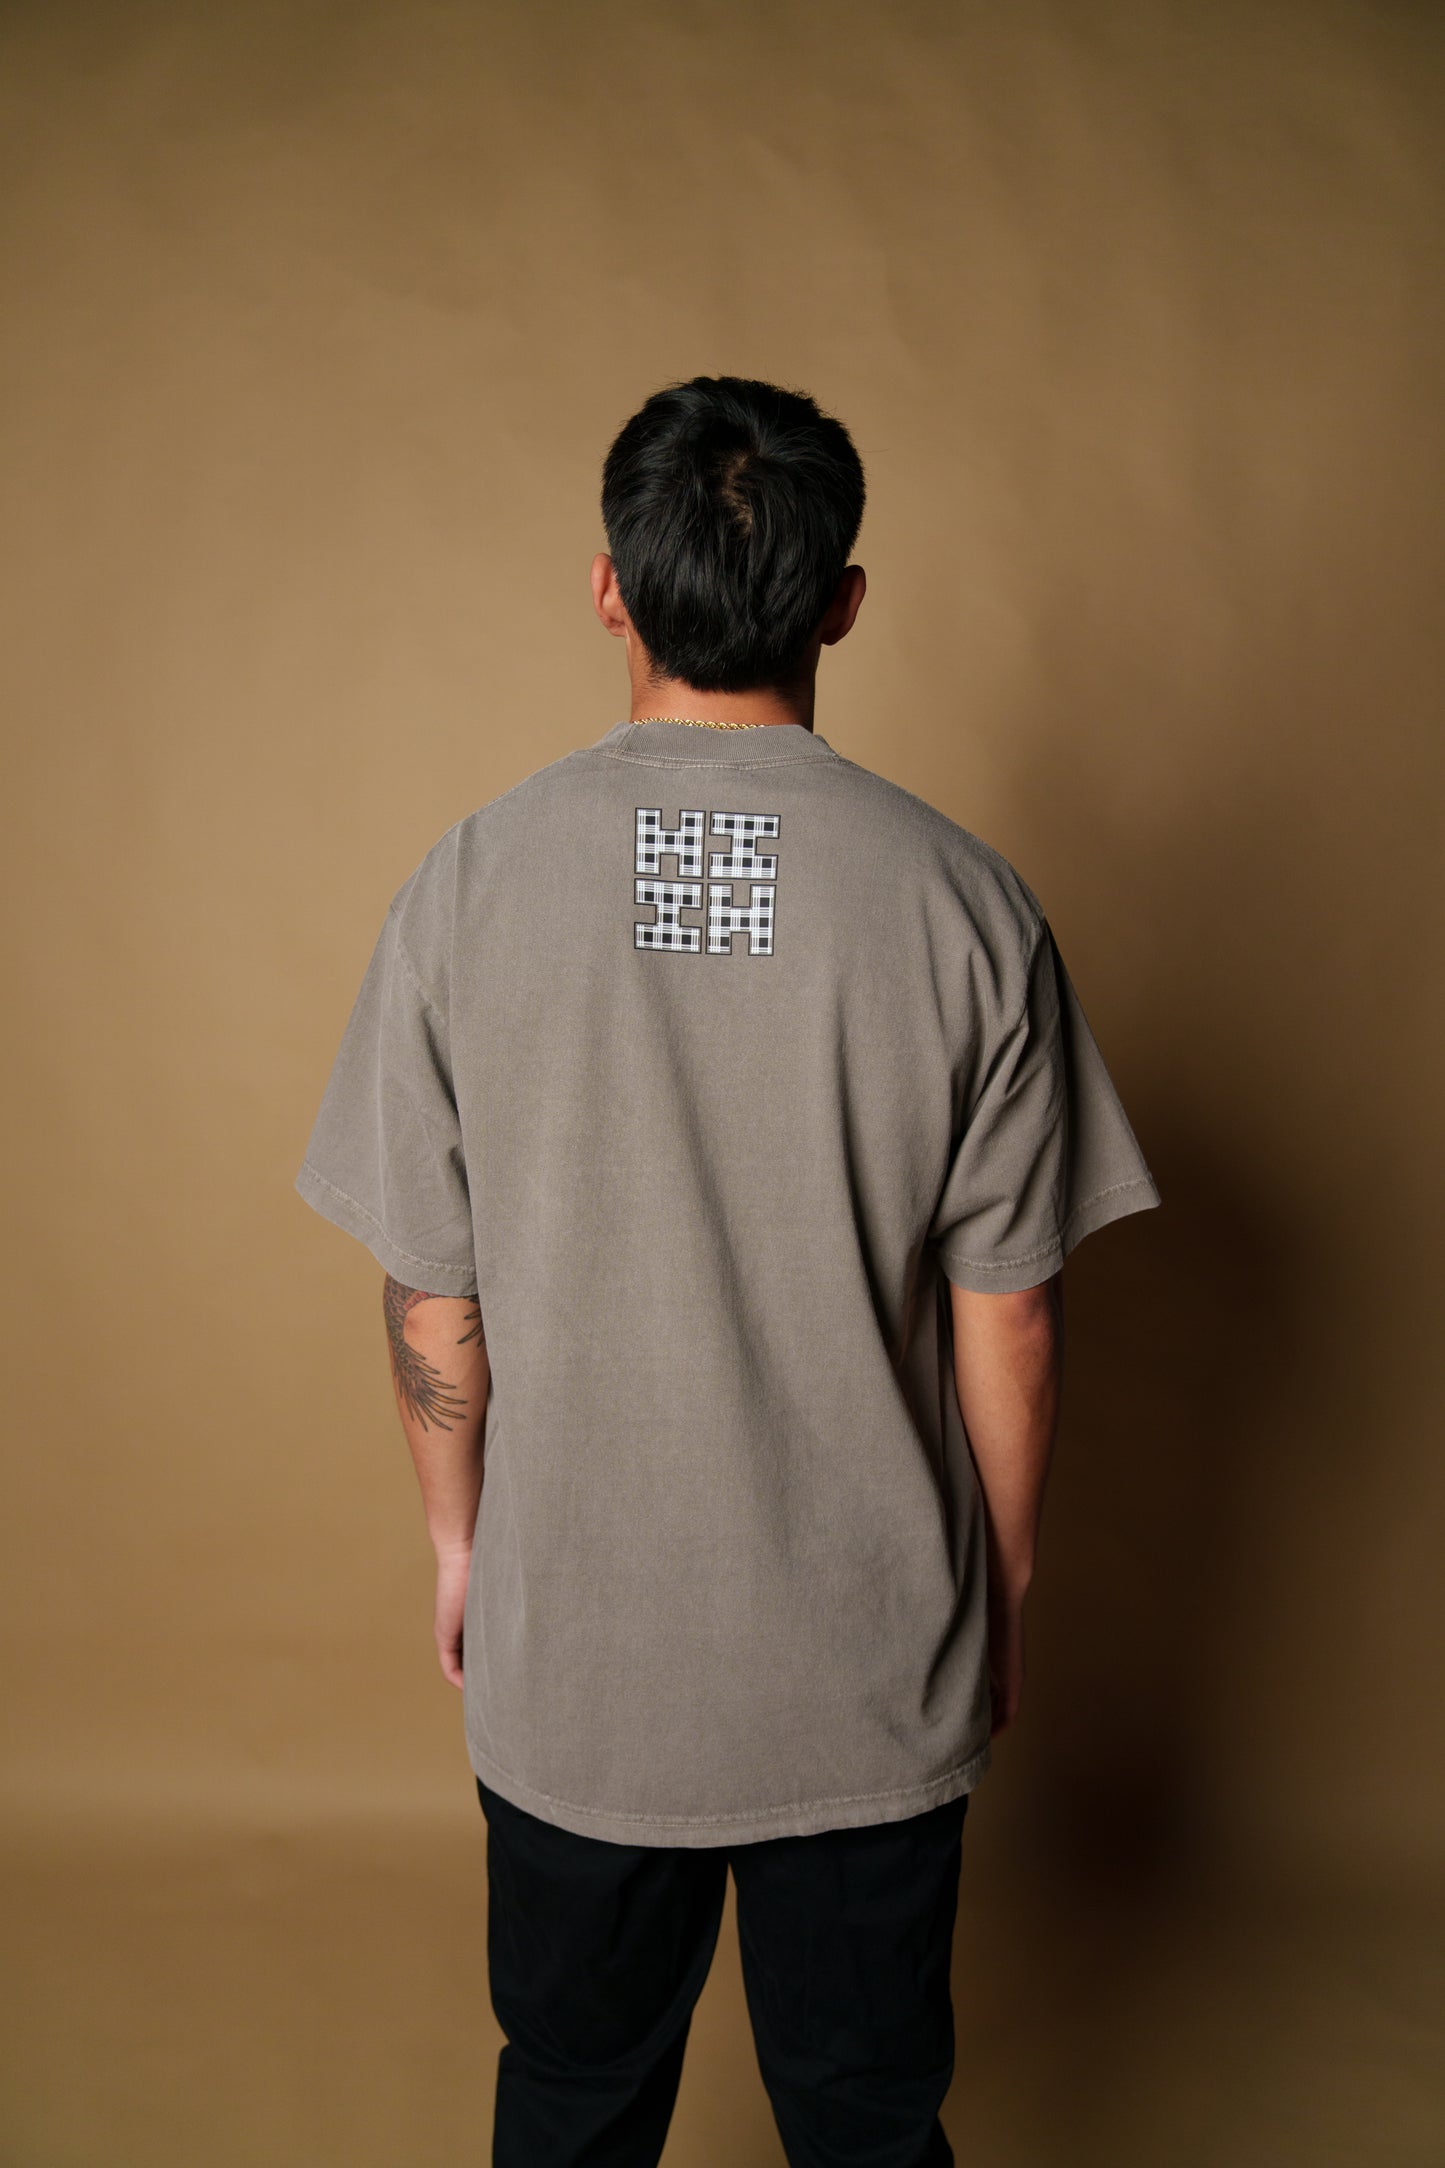 Made in Hawaii Gray T-Shirt - Gray/Black